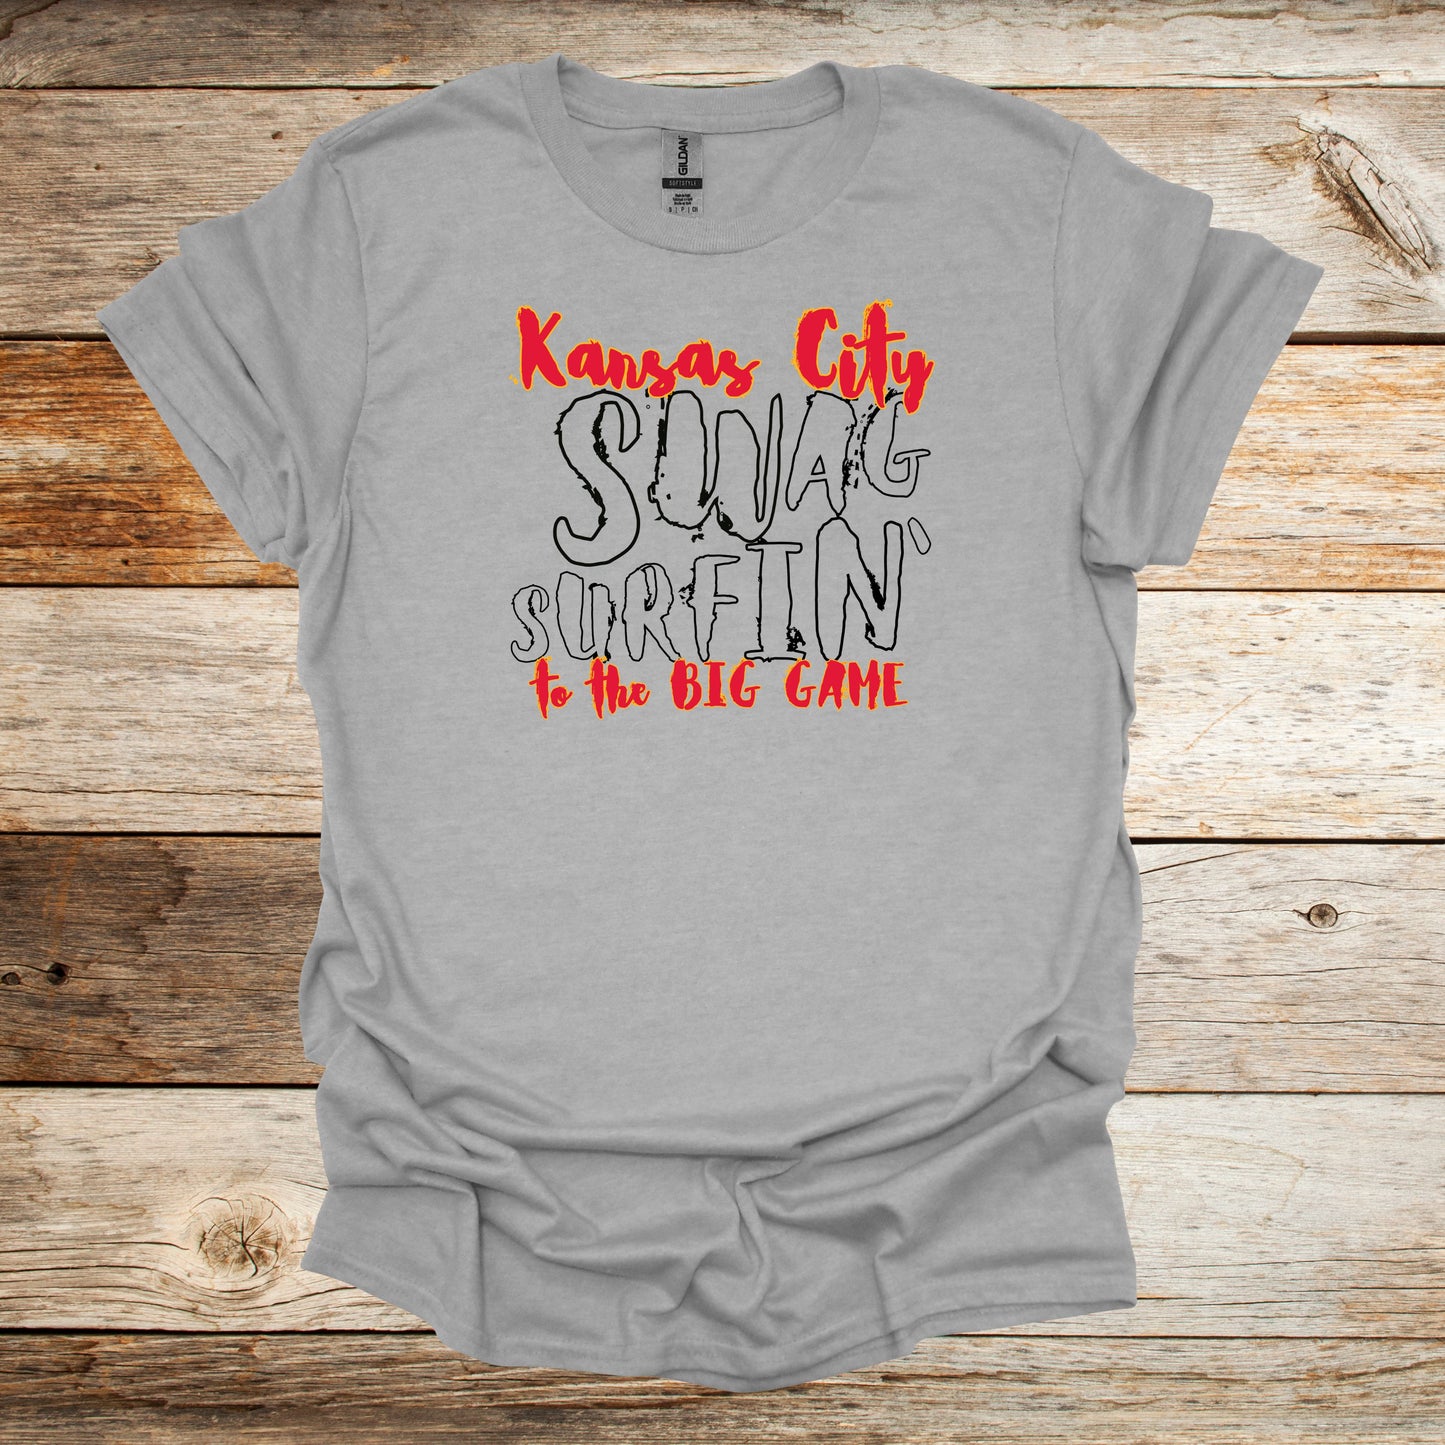 Kansas City Chiefs - Swag Surfin' - Adult Tee Shirt, Crewneck Sweatshirts and Hoodie